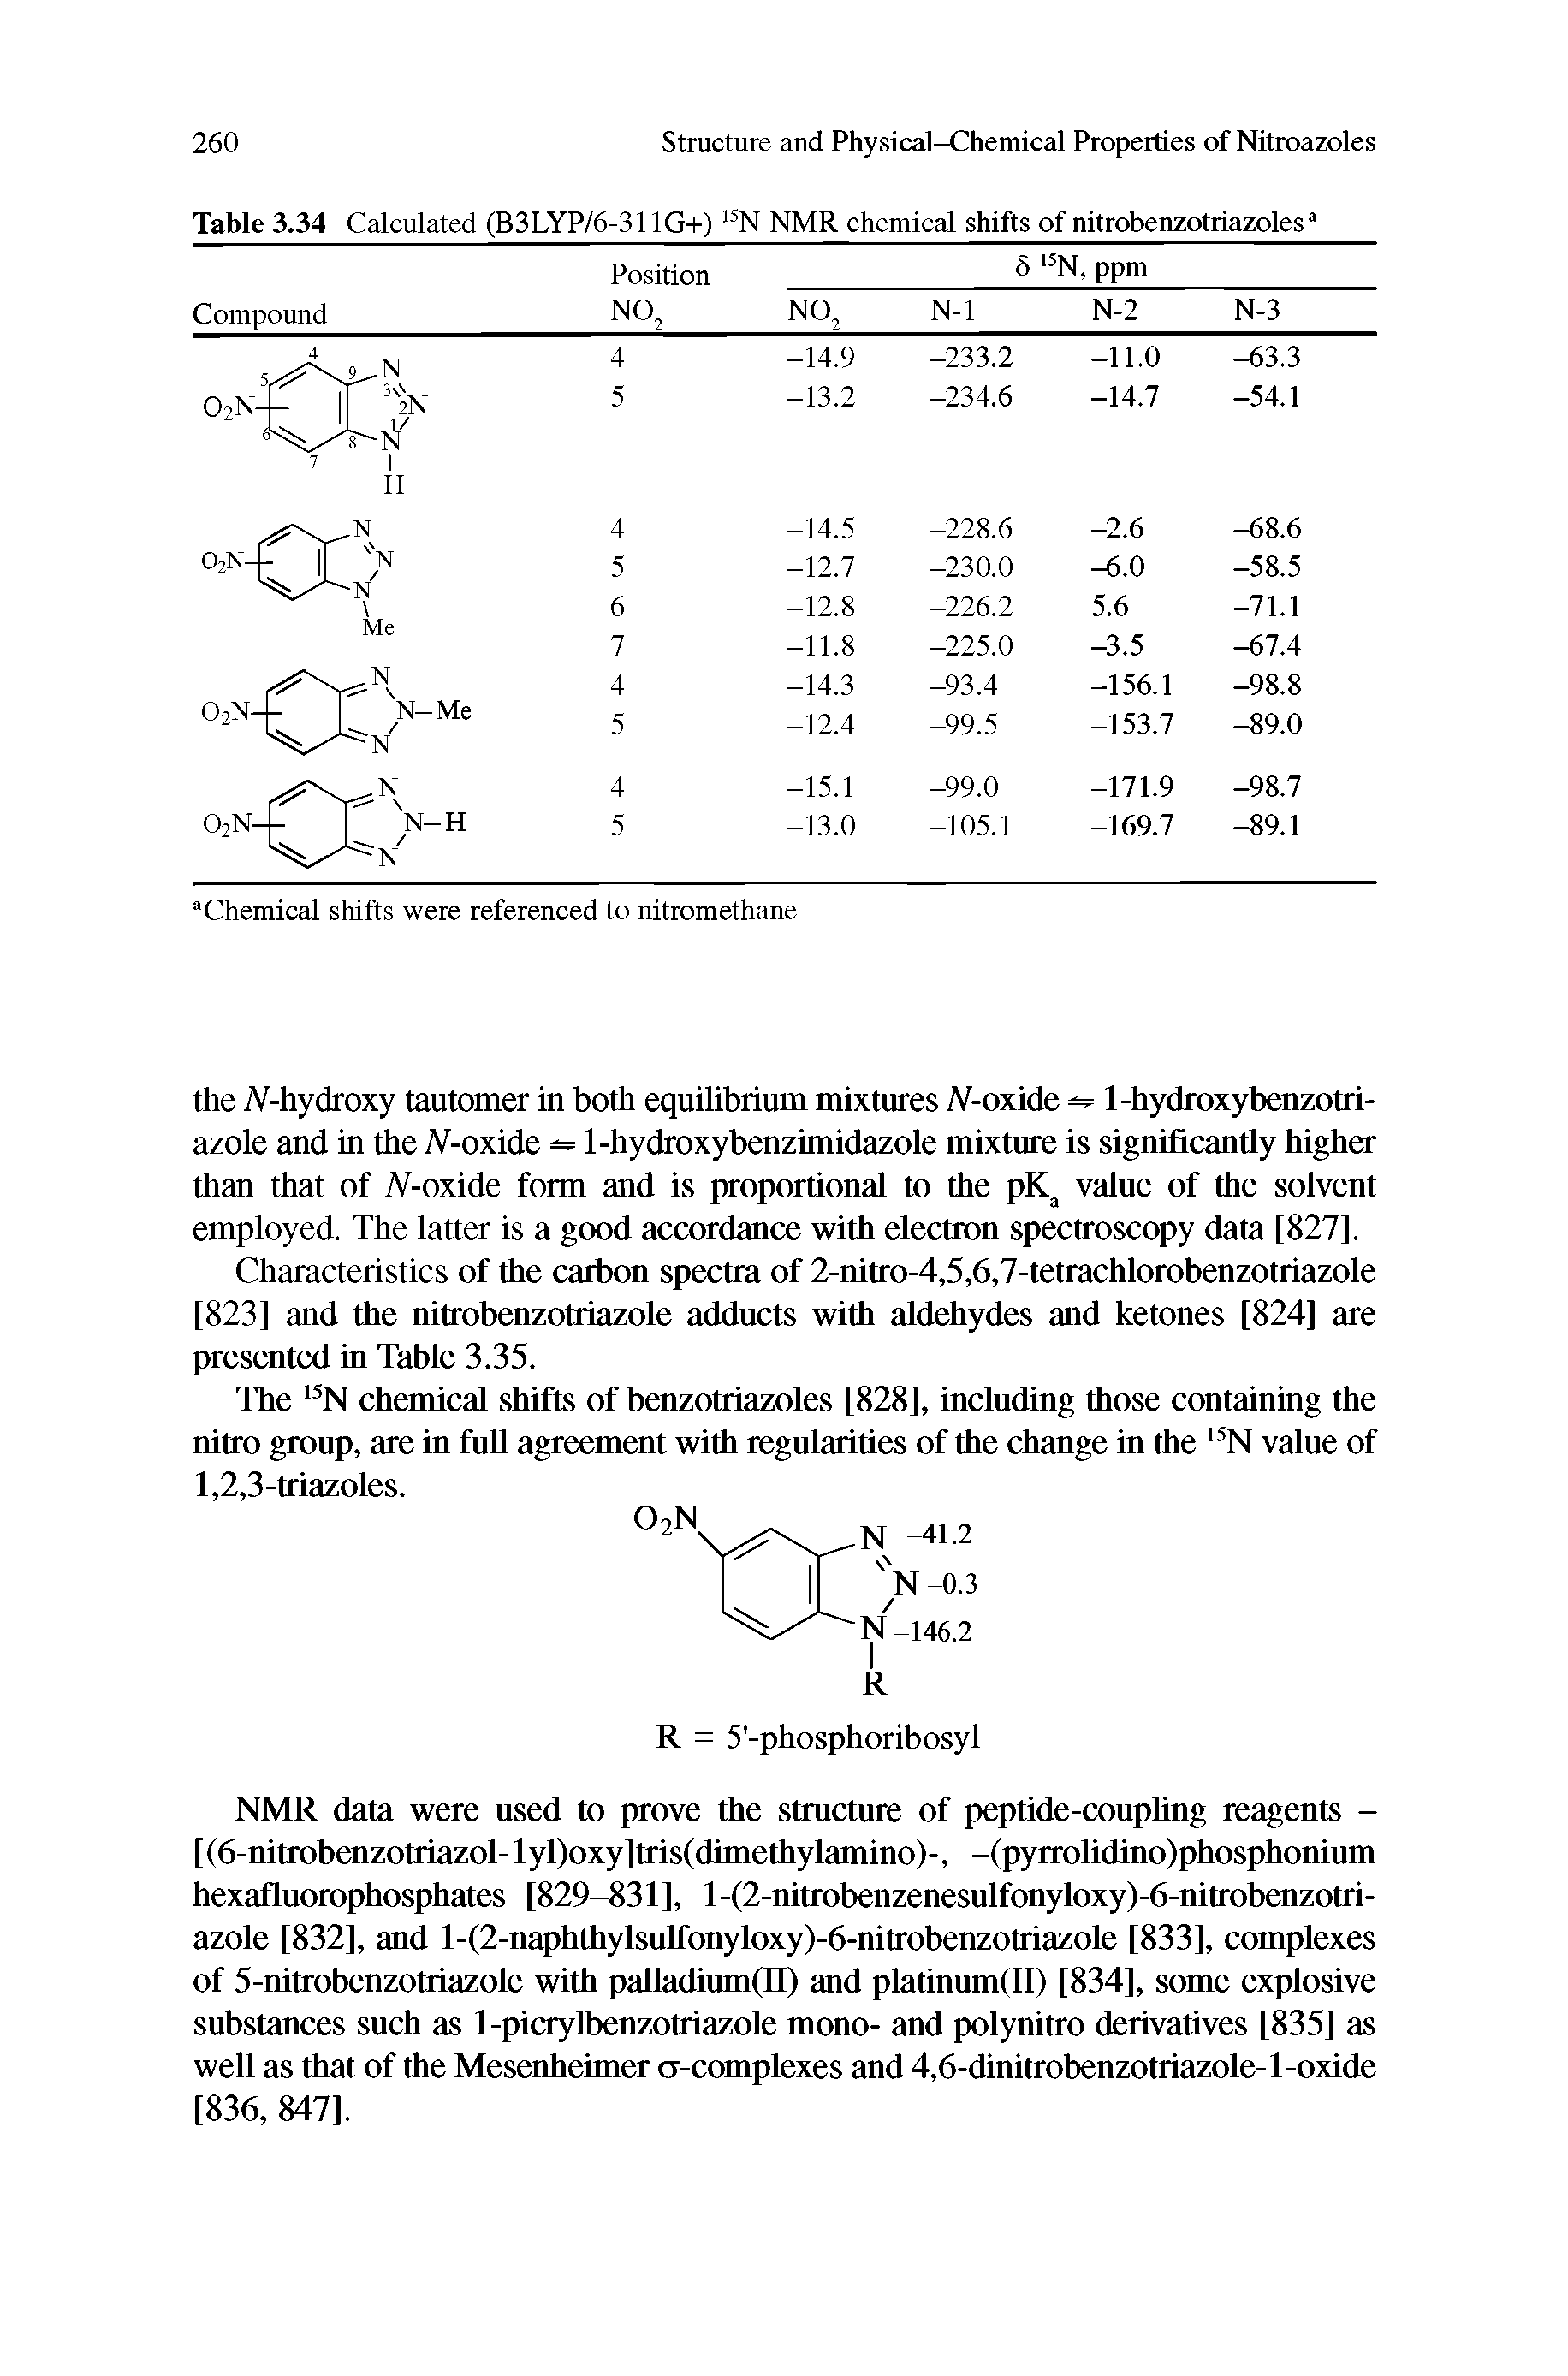 Table 3.34 Calculated (B3LYP/6-311G+) 15N NMR chemical shifts of nitrobenzotriazolesa...